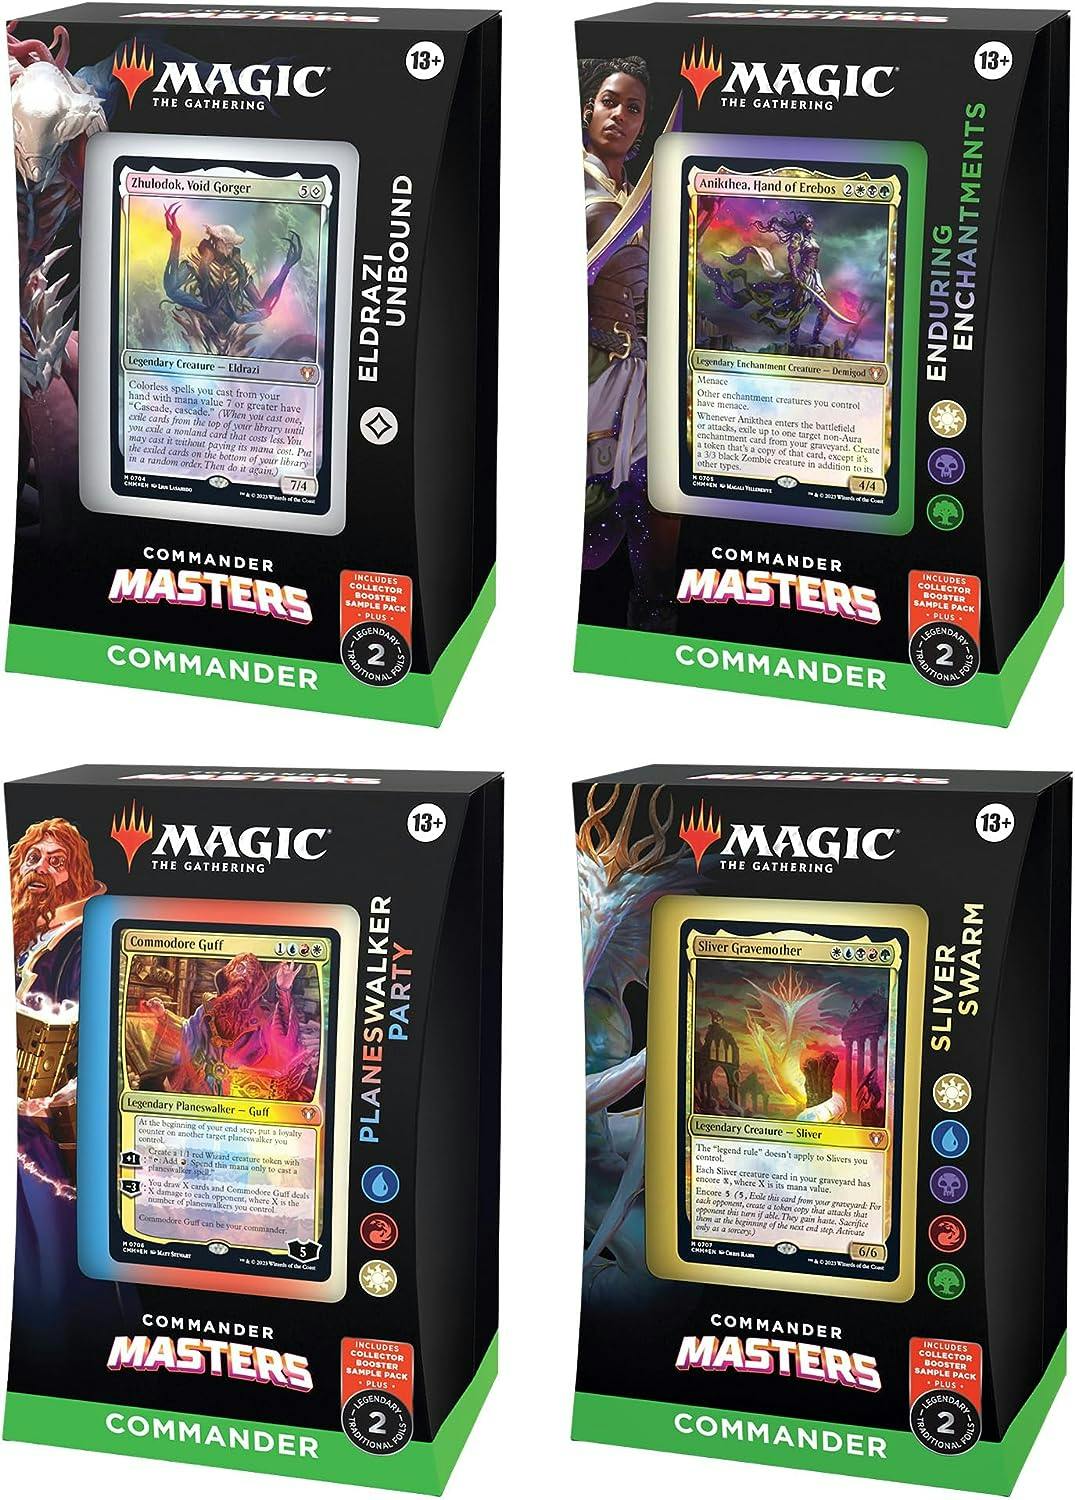 Magic The Gathering: Commander Masters Commander Deck